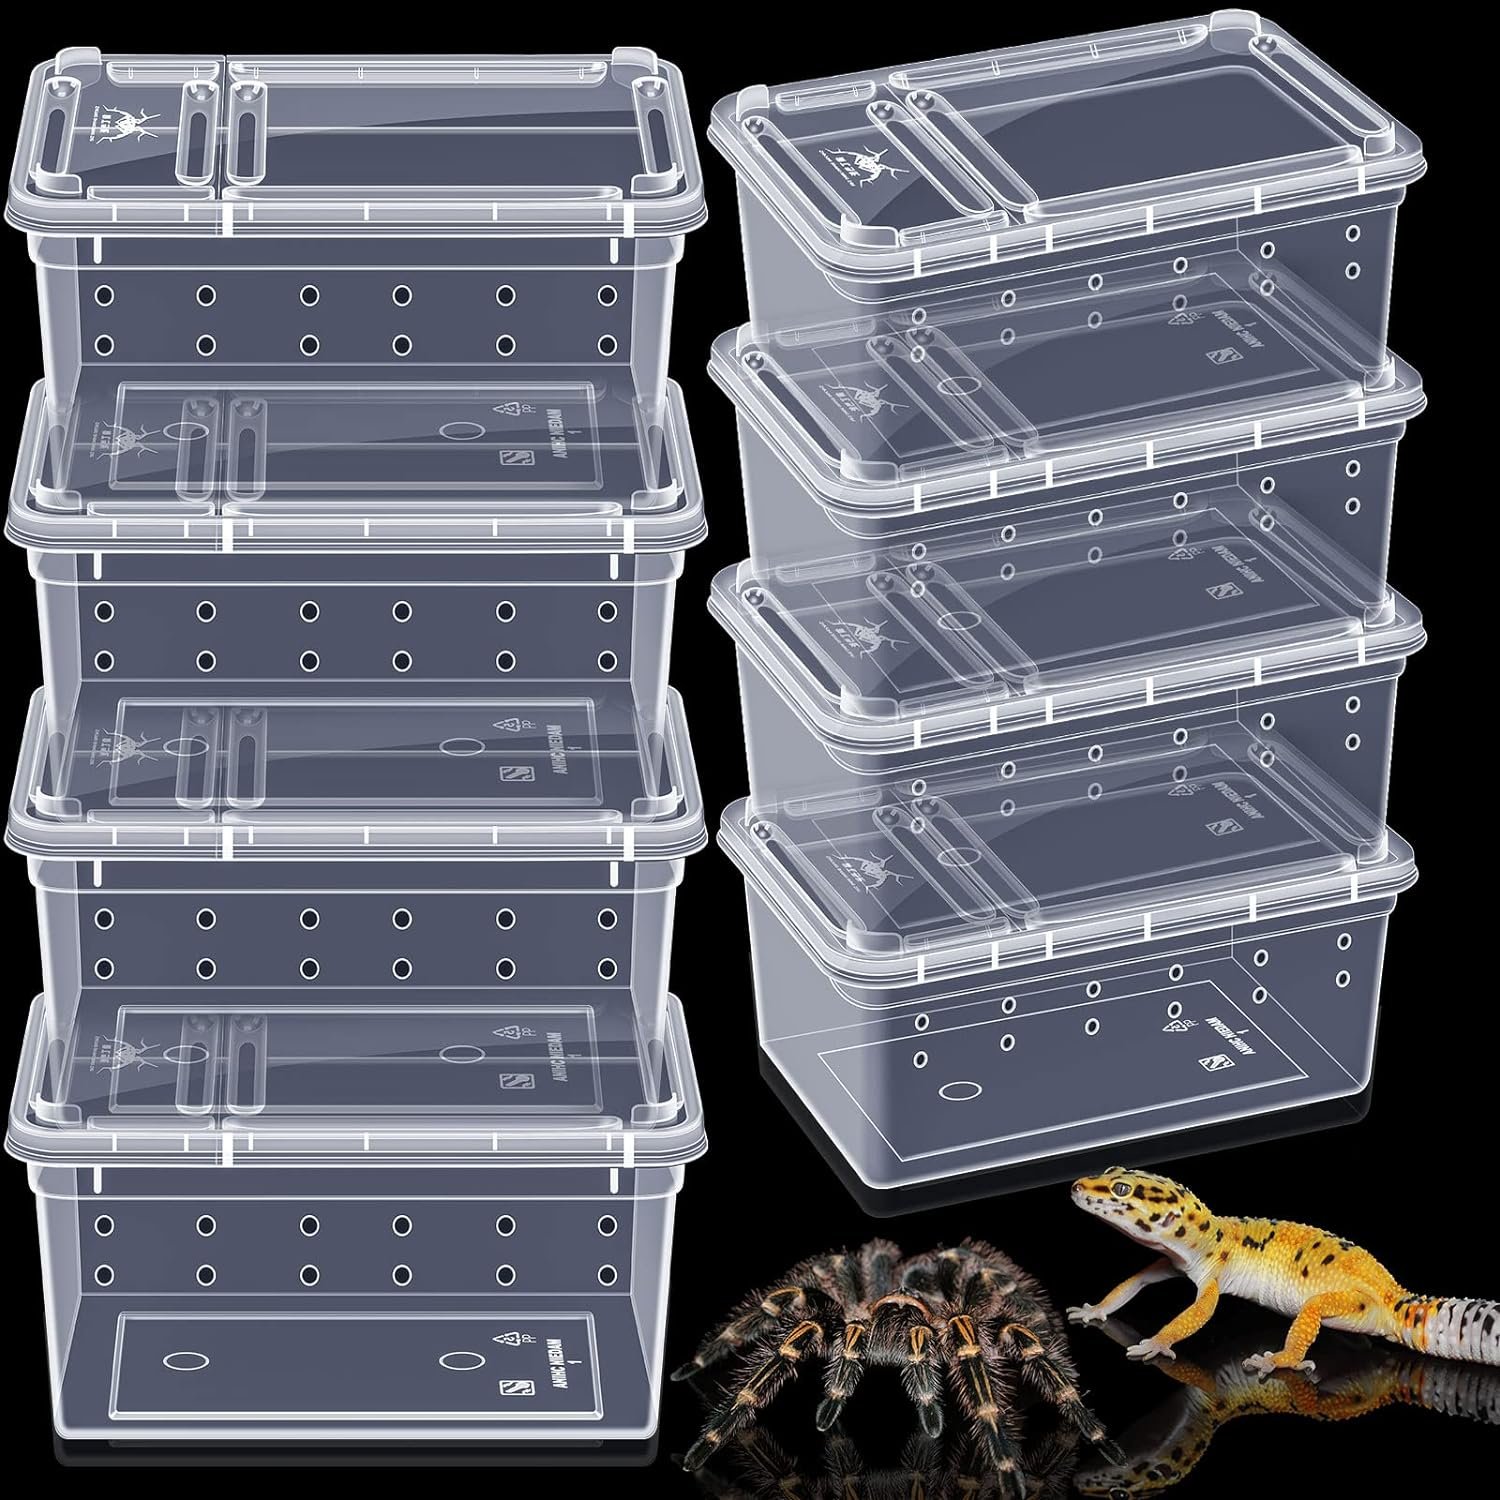 Irenare 8 Pcs Reptile Breeding Breeding Box Plastic Spider Terrarium Tarantula Feeding Box for Bearded Dragon Lizard Spider Gecko Scorpion, 5.9 x 3.9 x 2.5 in